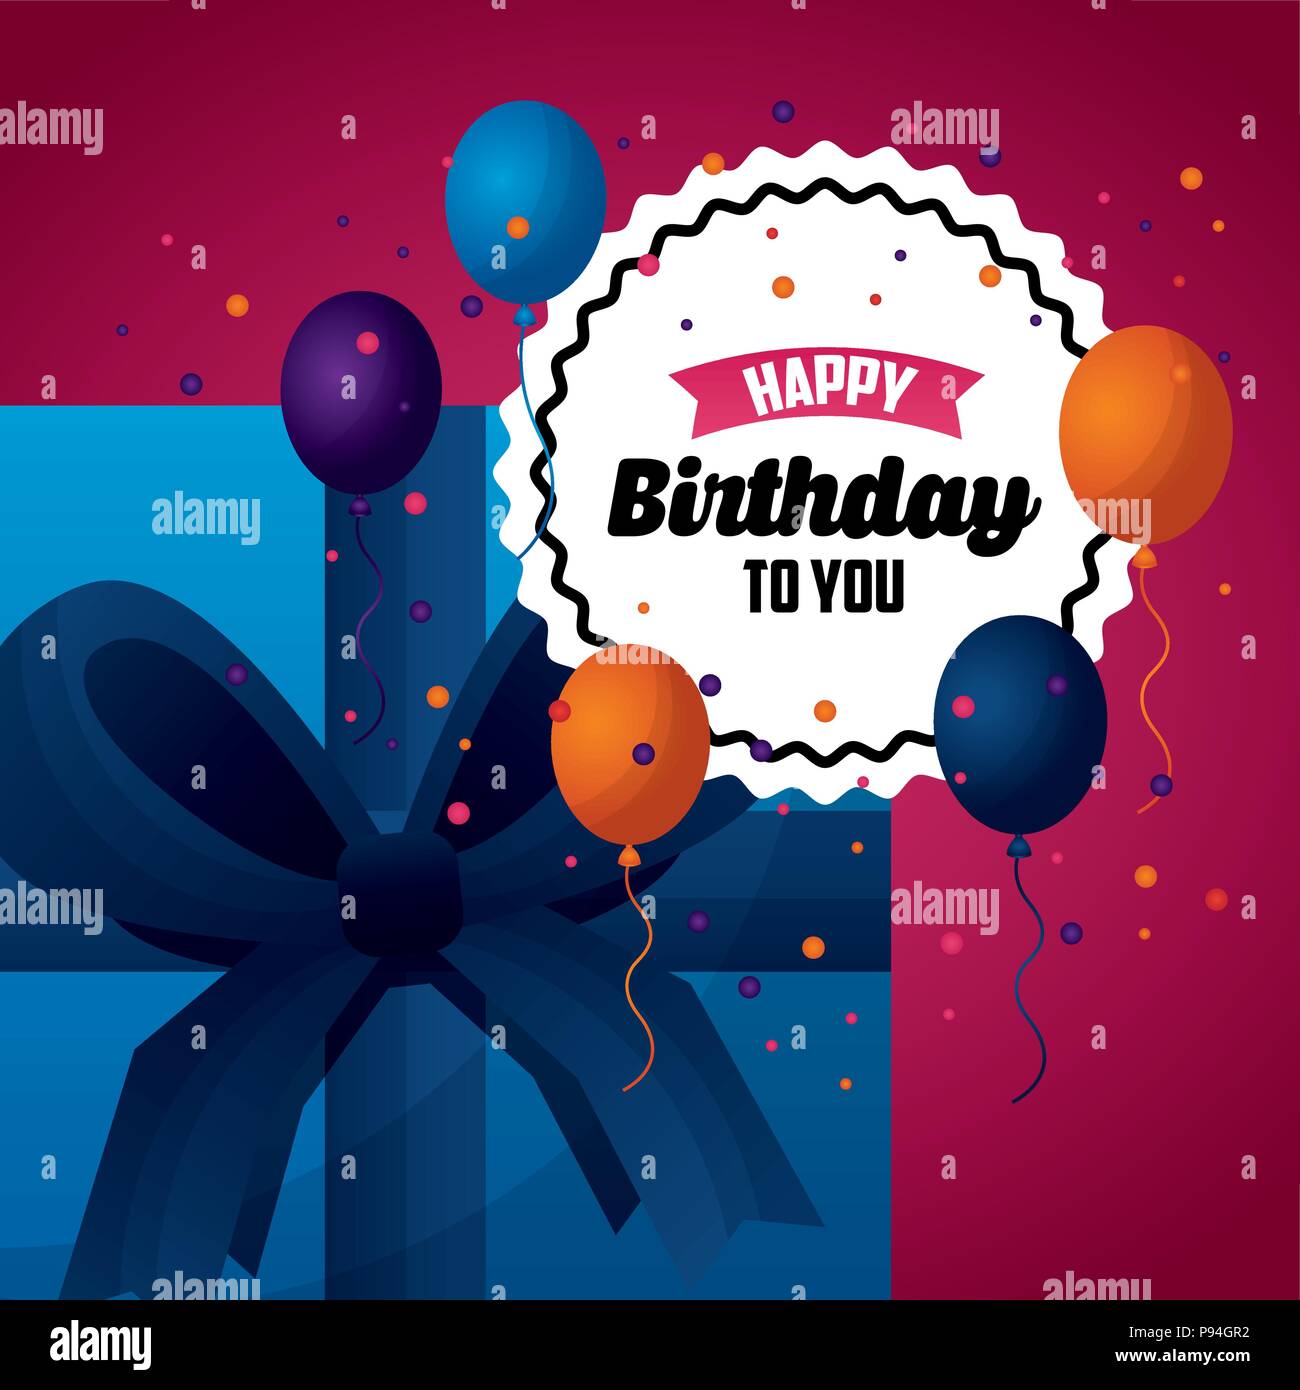 Happy Birthday ribbon vector Stock Vector Image & Art - Alamy